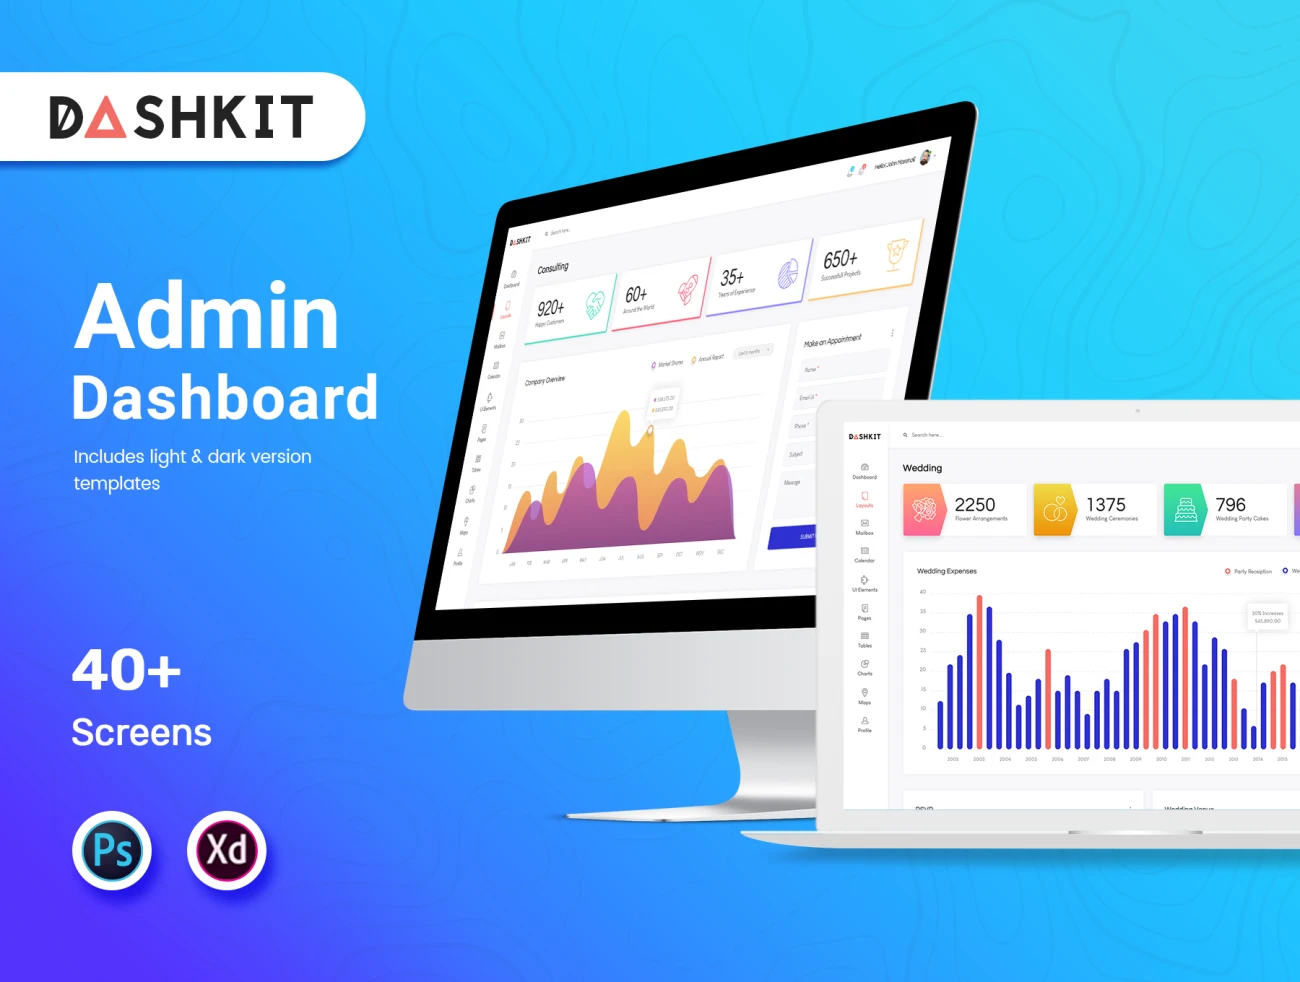 Dashkit Admin Dashboard UI Kit 后台管理仪表板UI套件黑白两色版本-UI/UX、ui套件、主页、列表、卡片式、图表、应用、数据可视化-仪表板、海报、网站、表单-到位啦UI